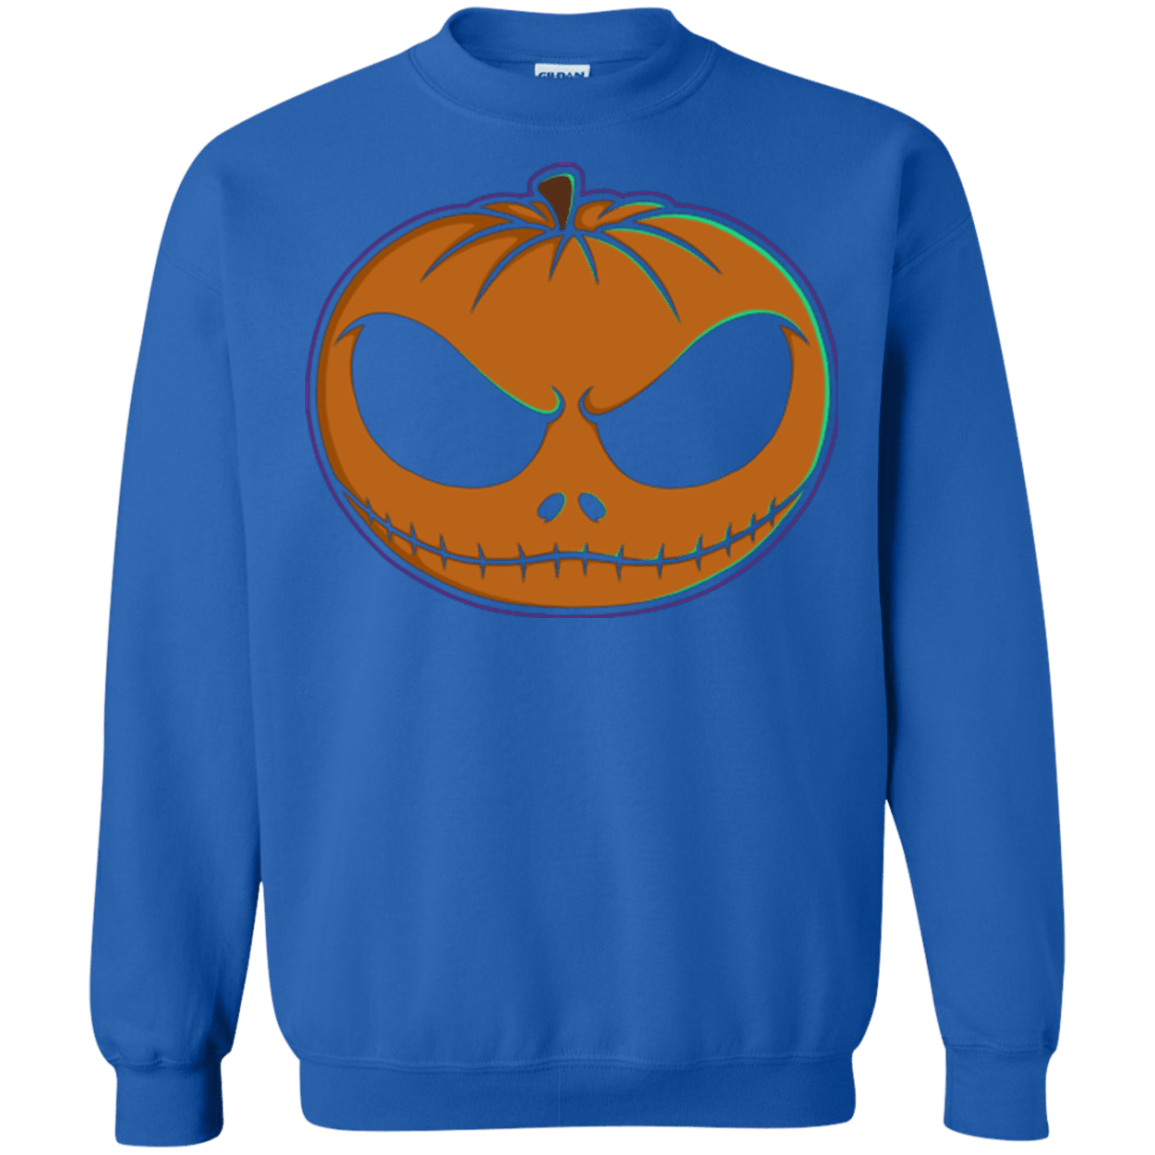 Sweatshirts Royal / Small Jack O'Lantern Crewneck Sweatshirt